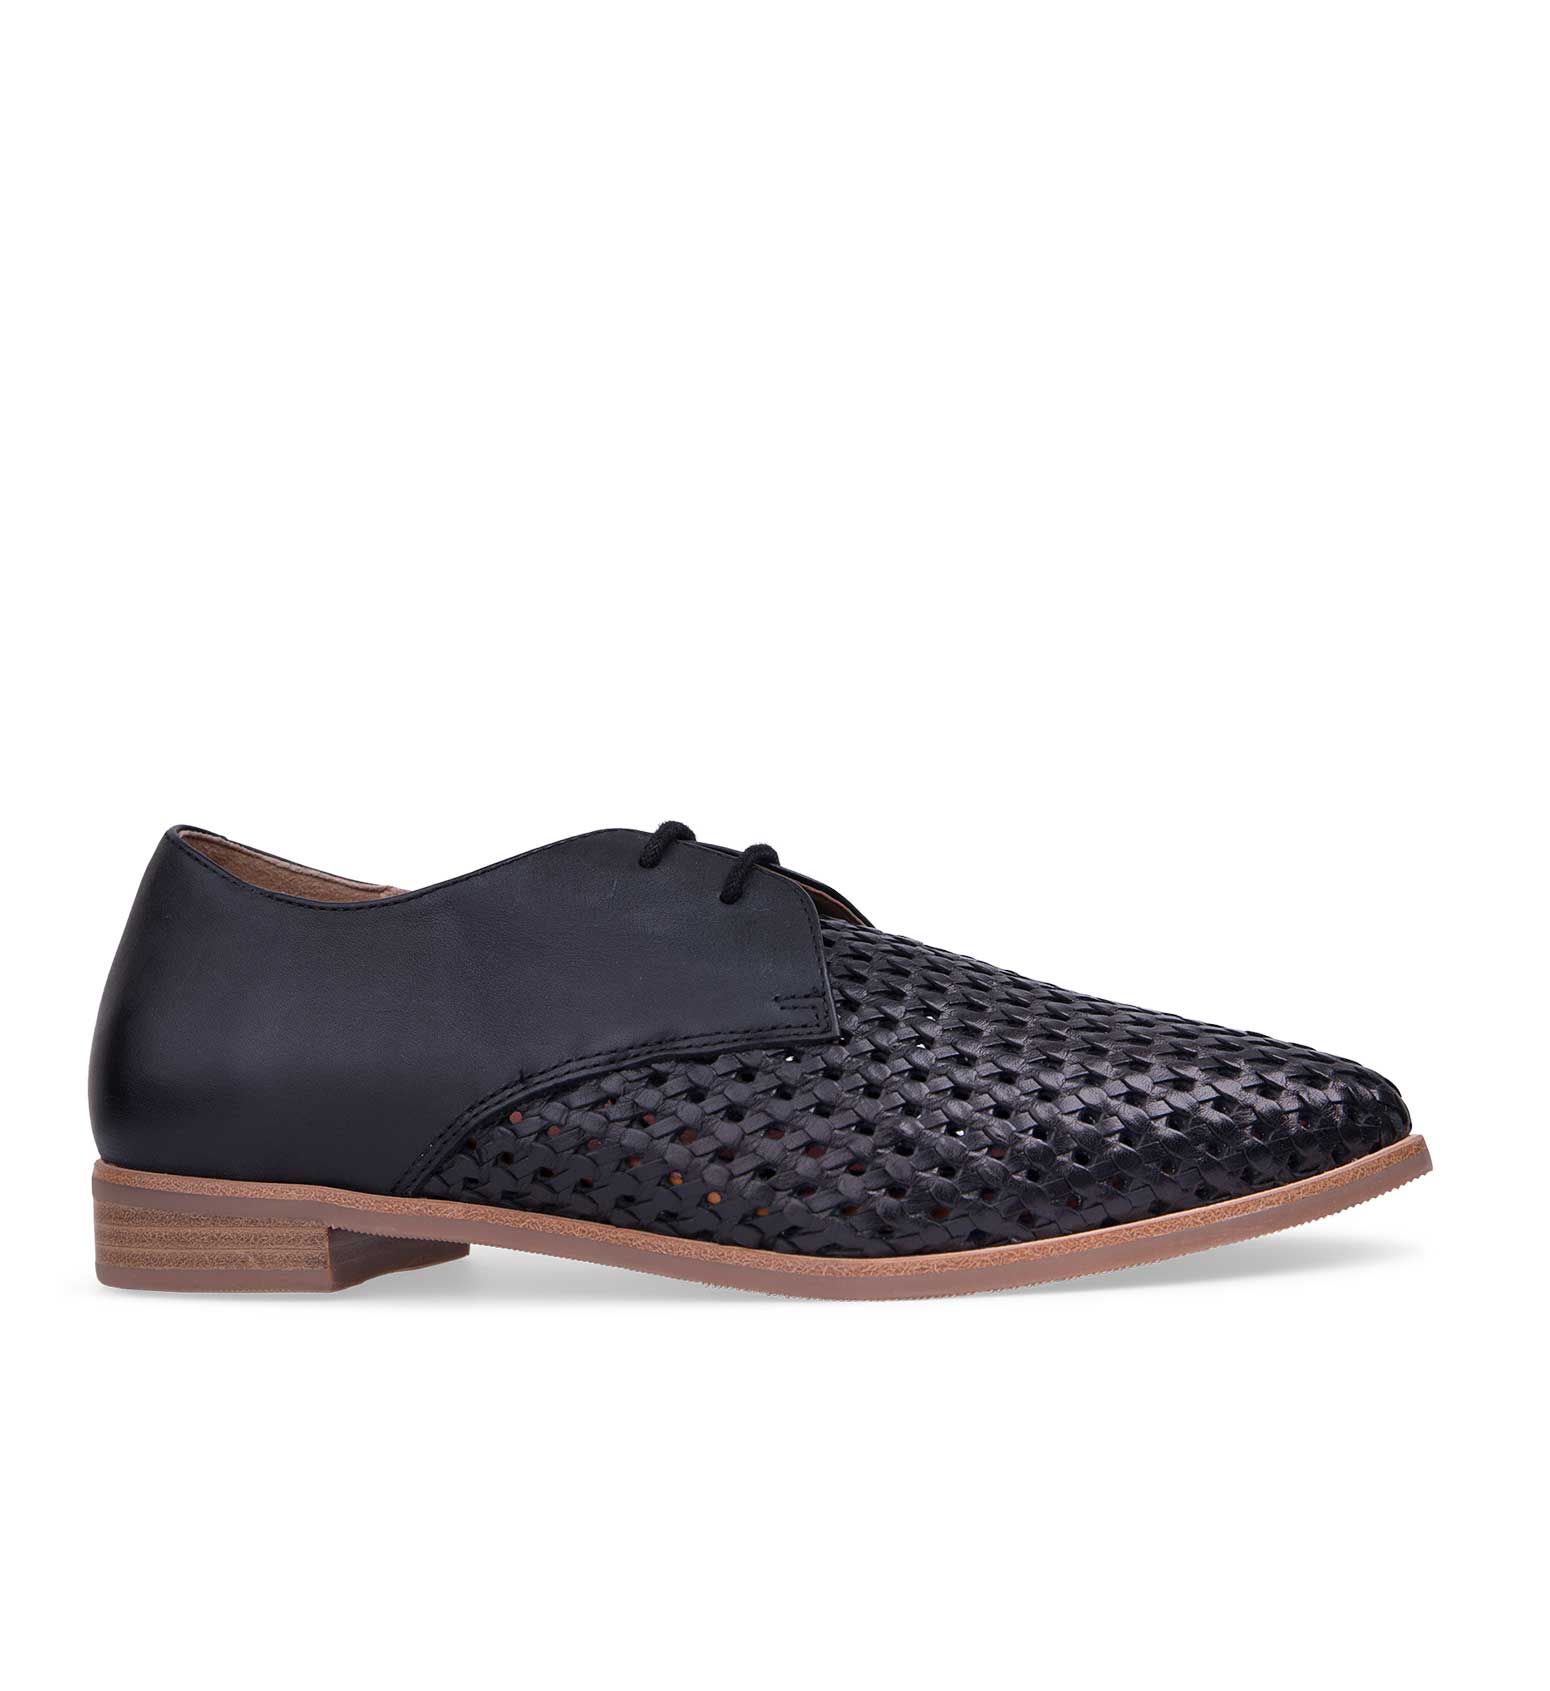 Cockatoo Black Leather Flats | Bared Footwear